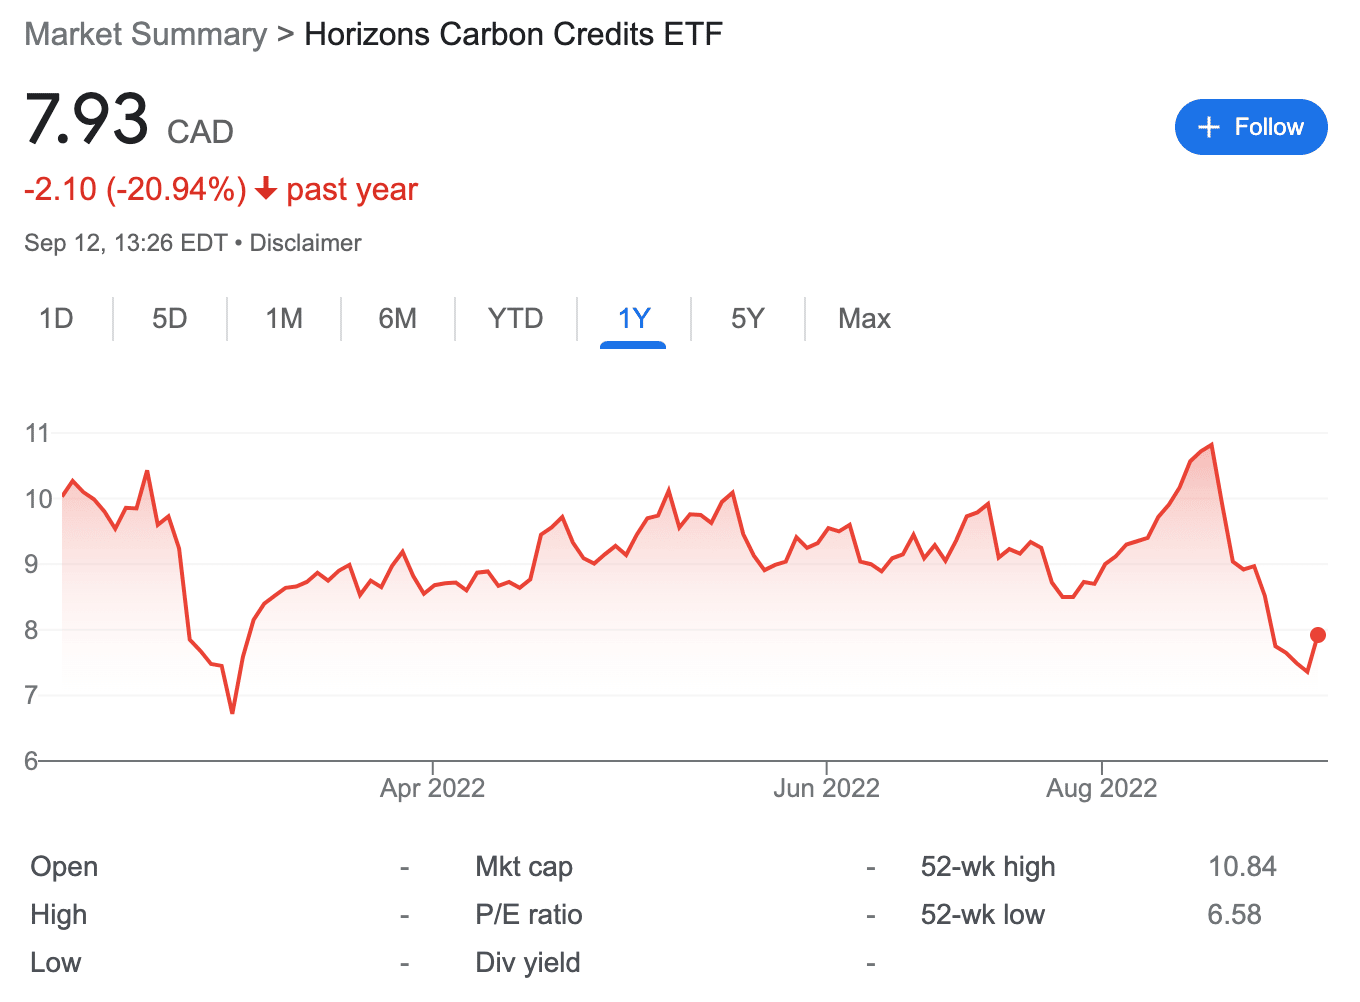 Horizons carbon credit ETF